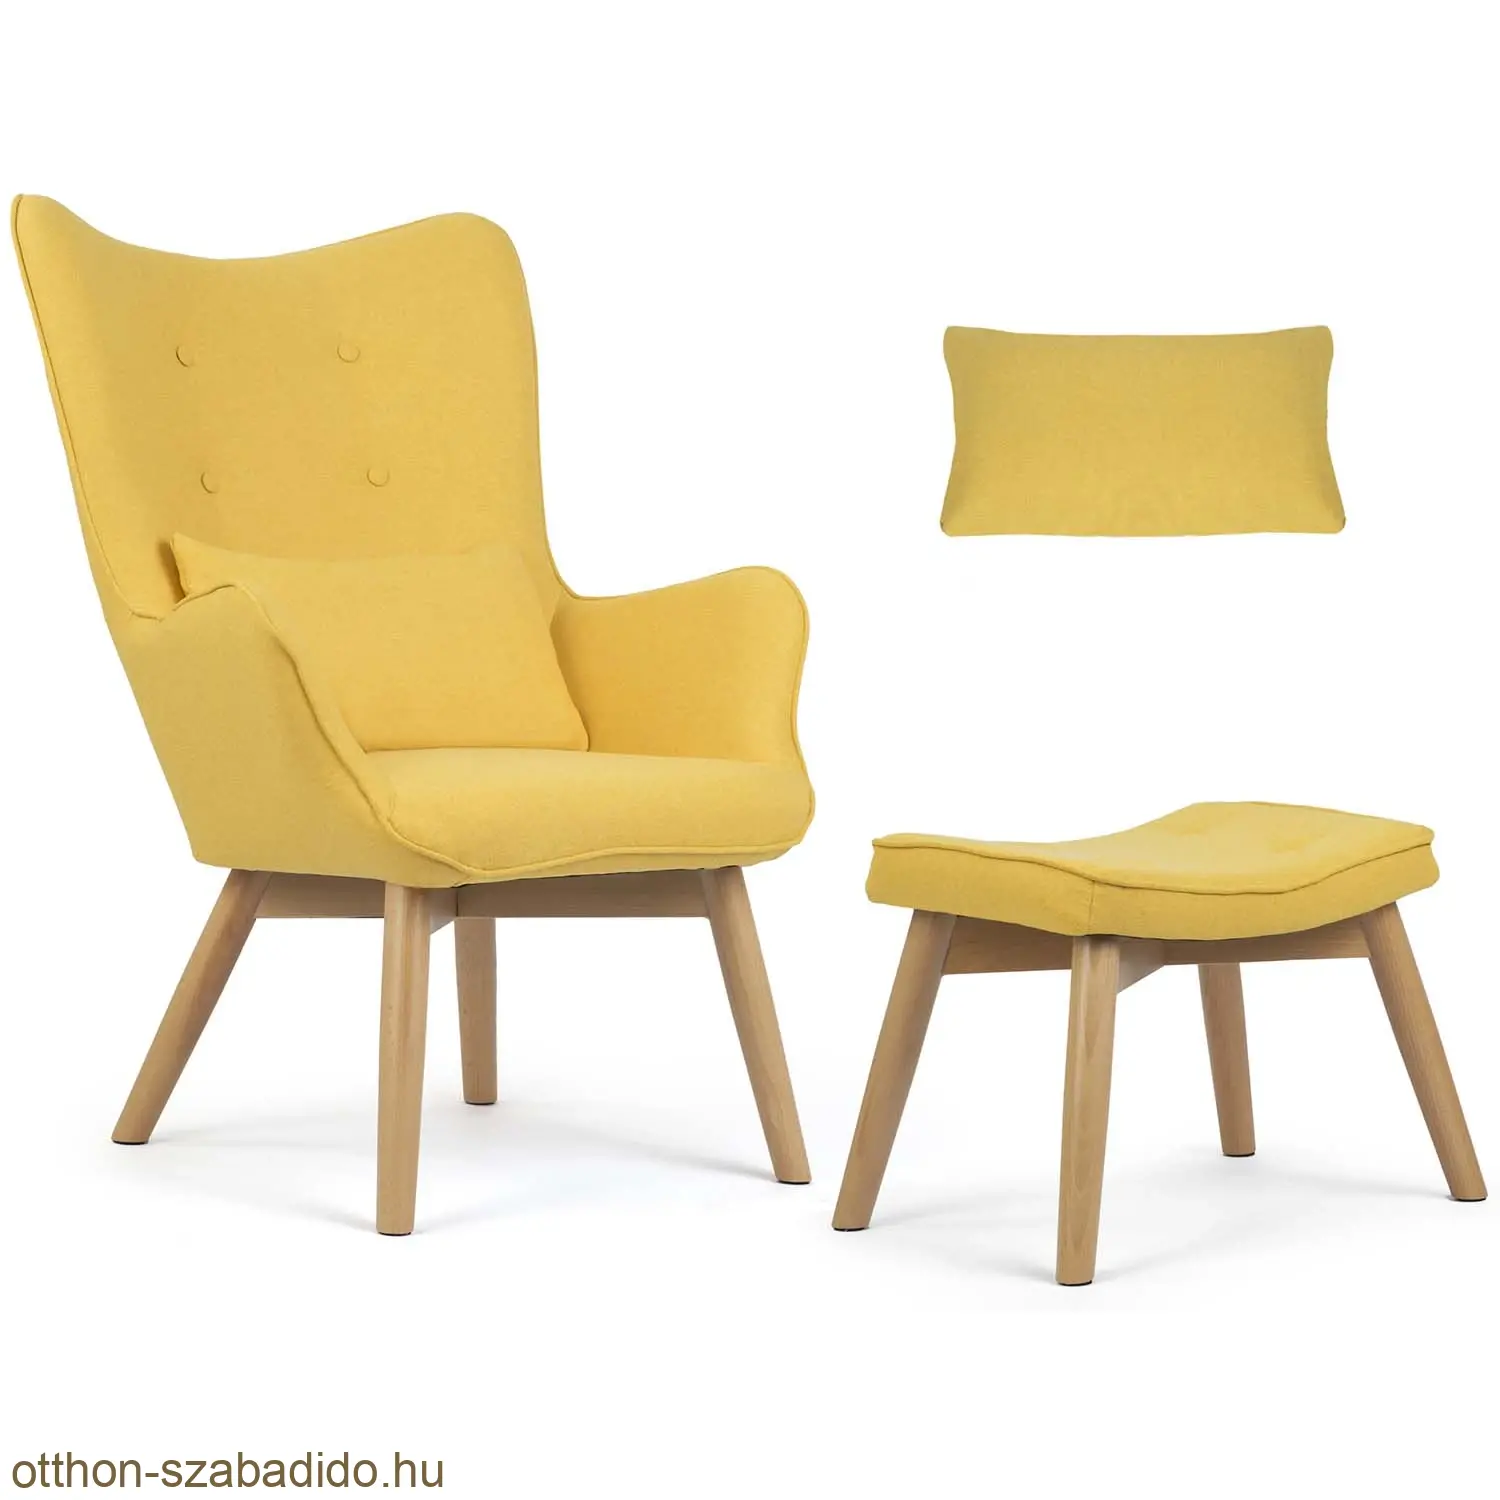 SOFOTEL skandináv stílusú szárnyas szék lábtartóval, sárga